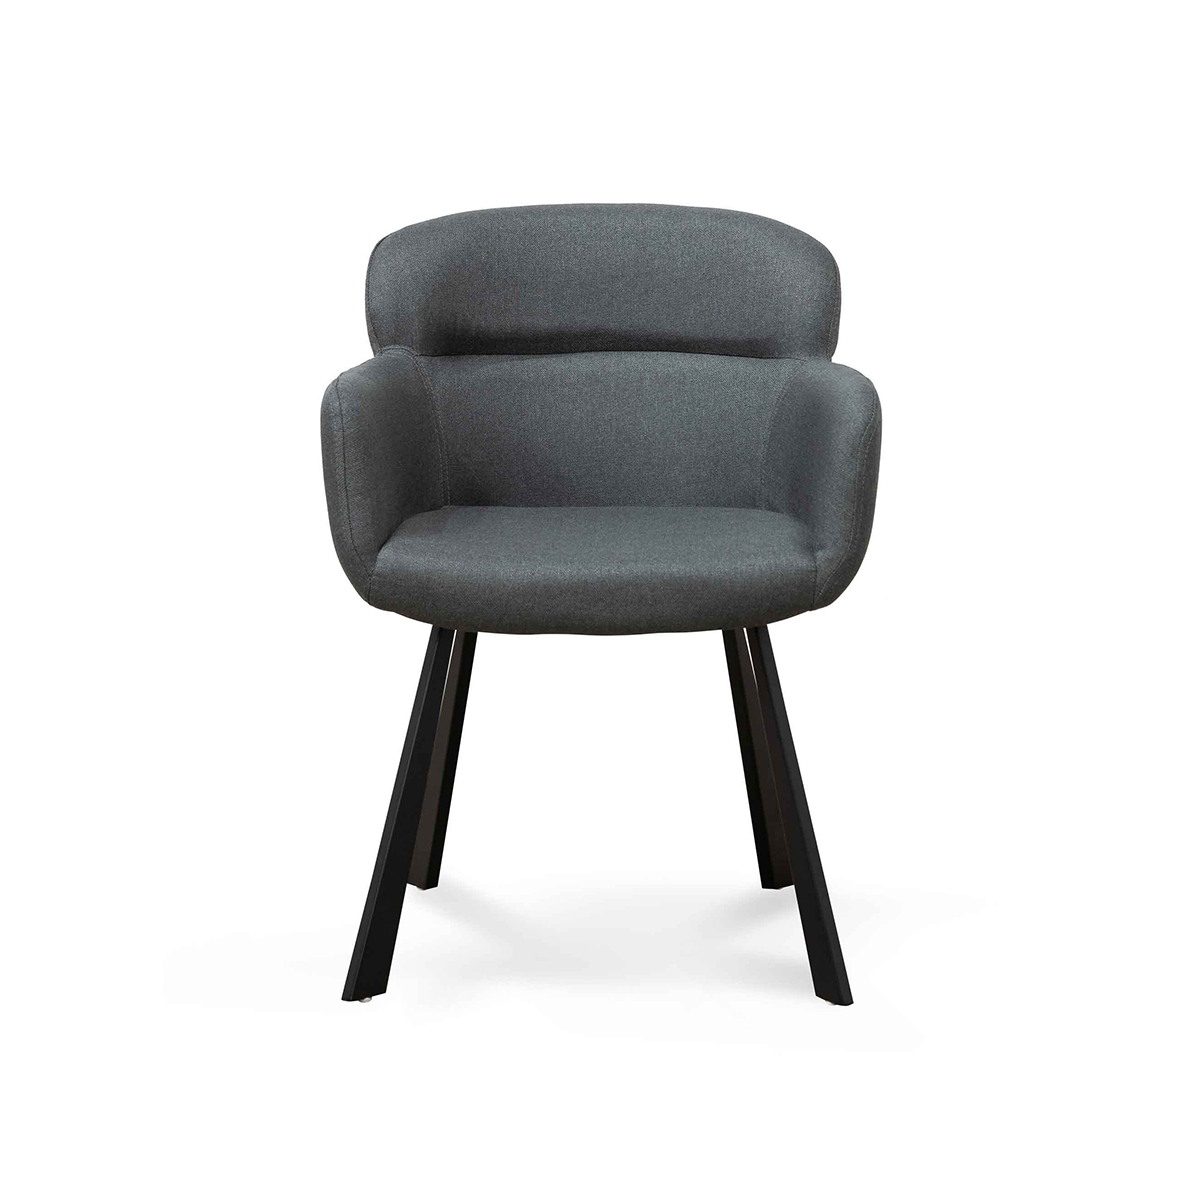 FondHouse Asafa Fabric Dining Chair - Gunmetal Grey with Black Legs